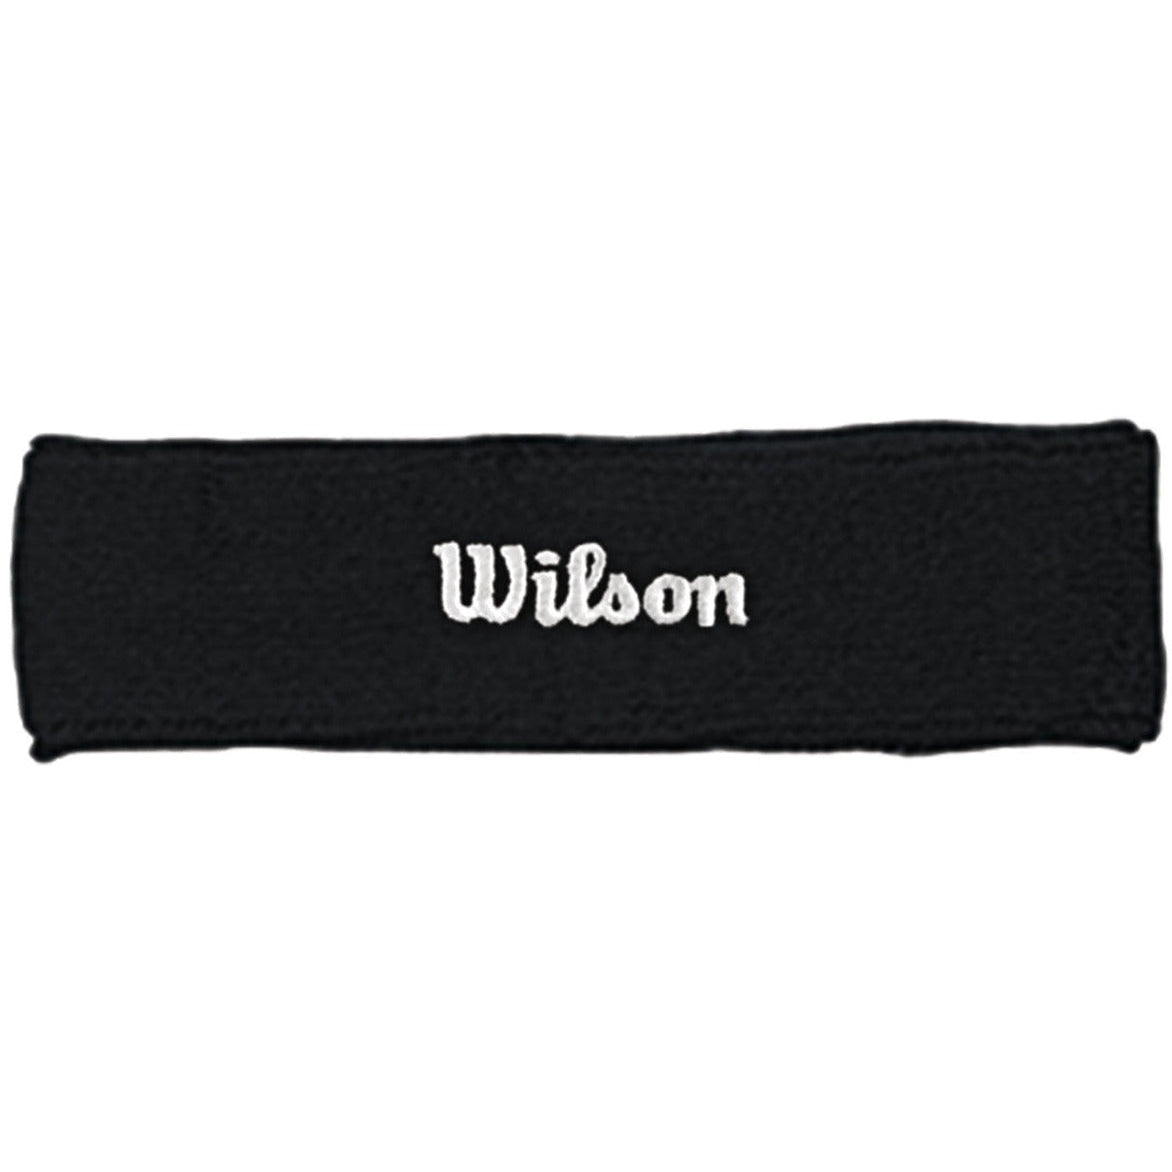 Wilson Logo Headband